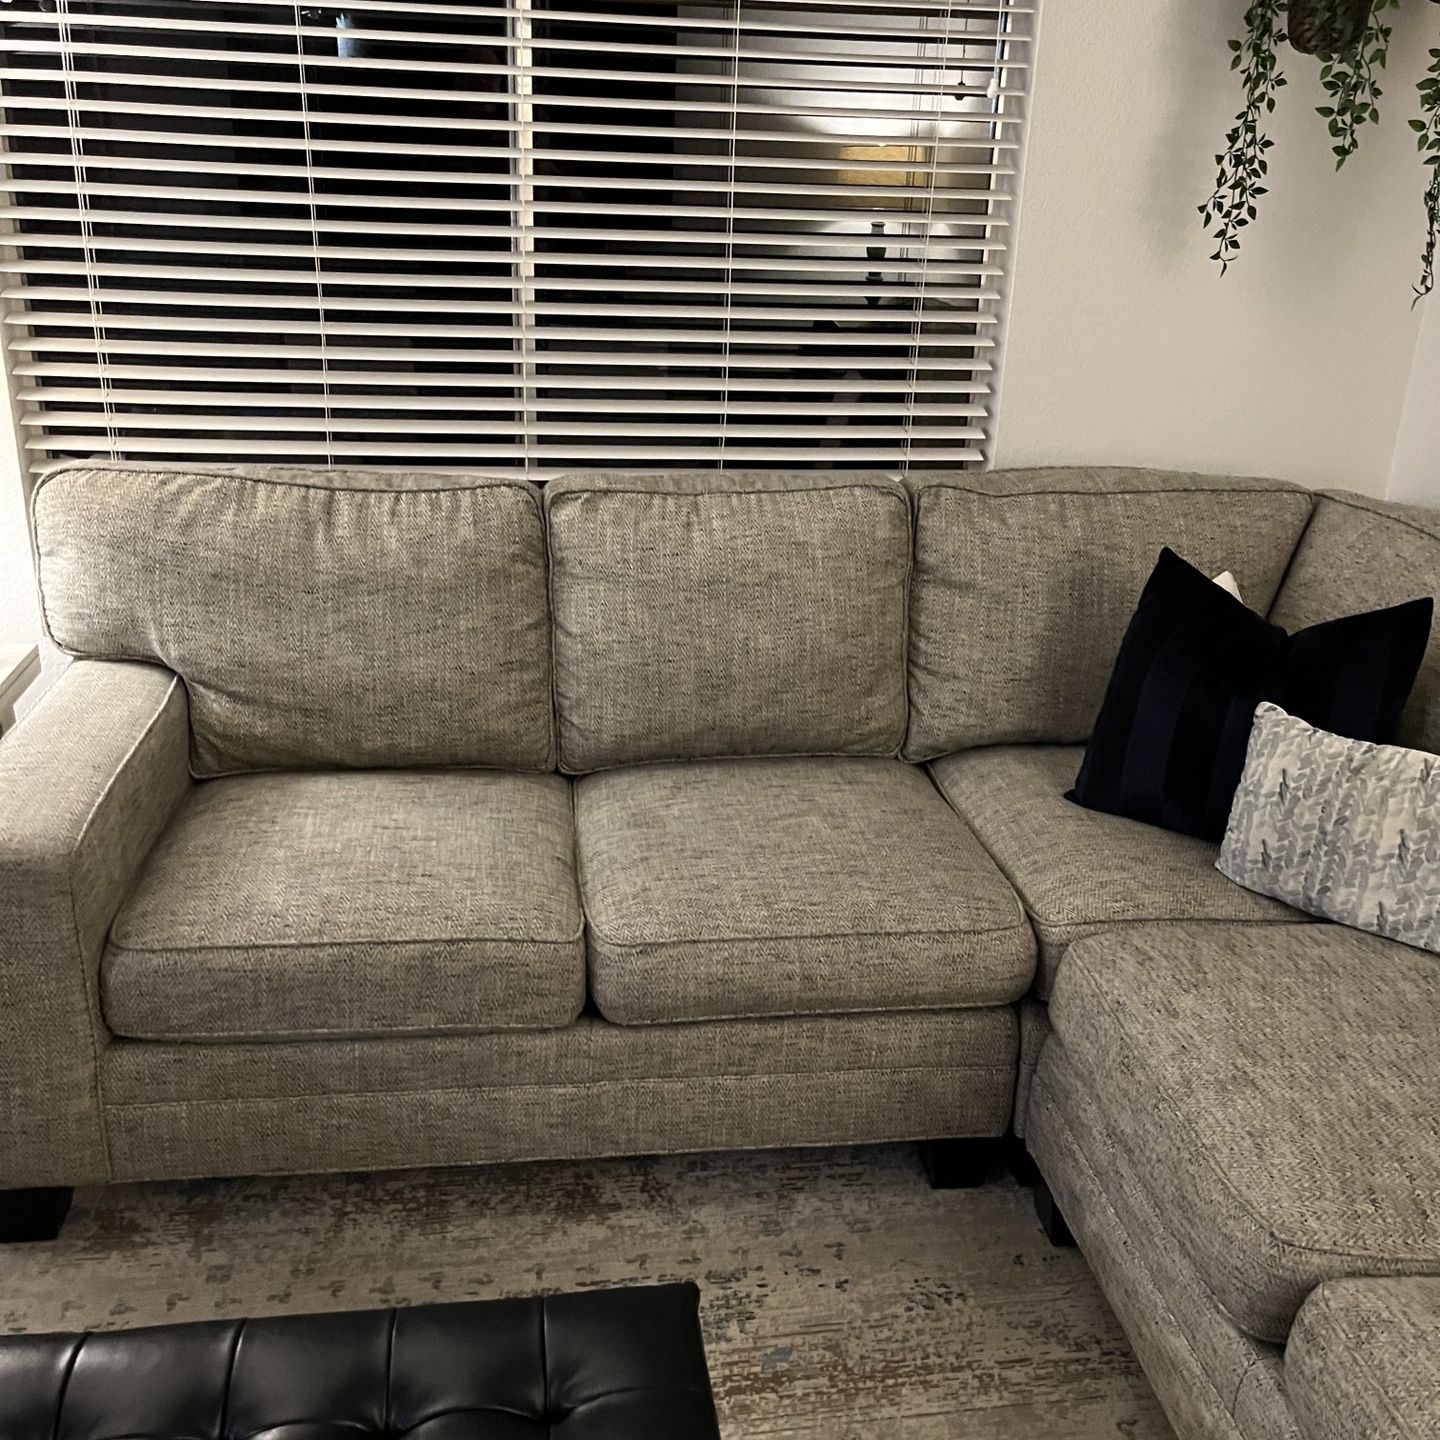 Large sectional Sofa